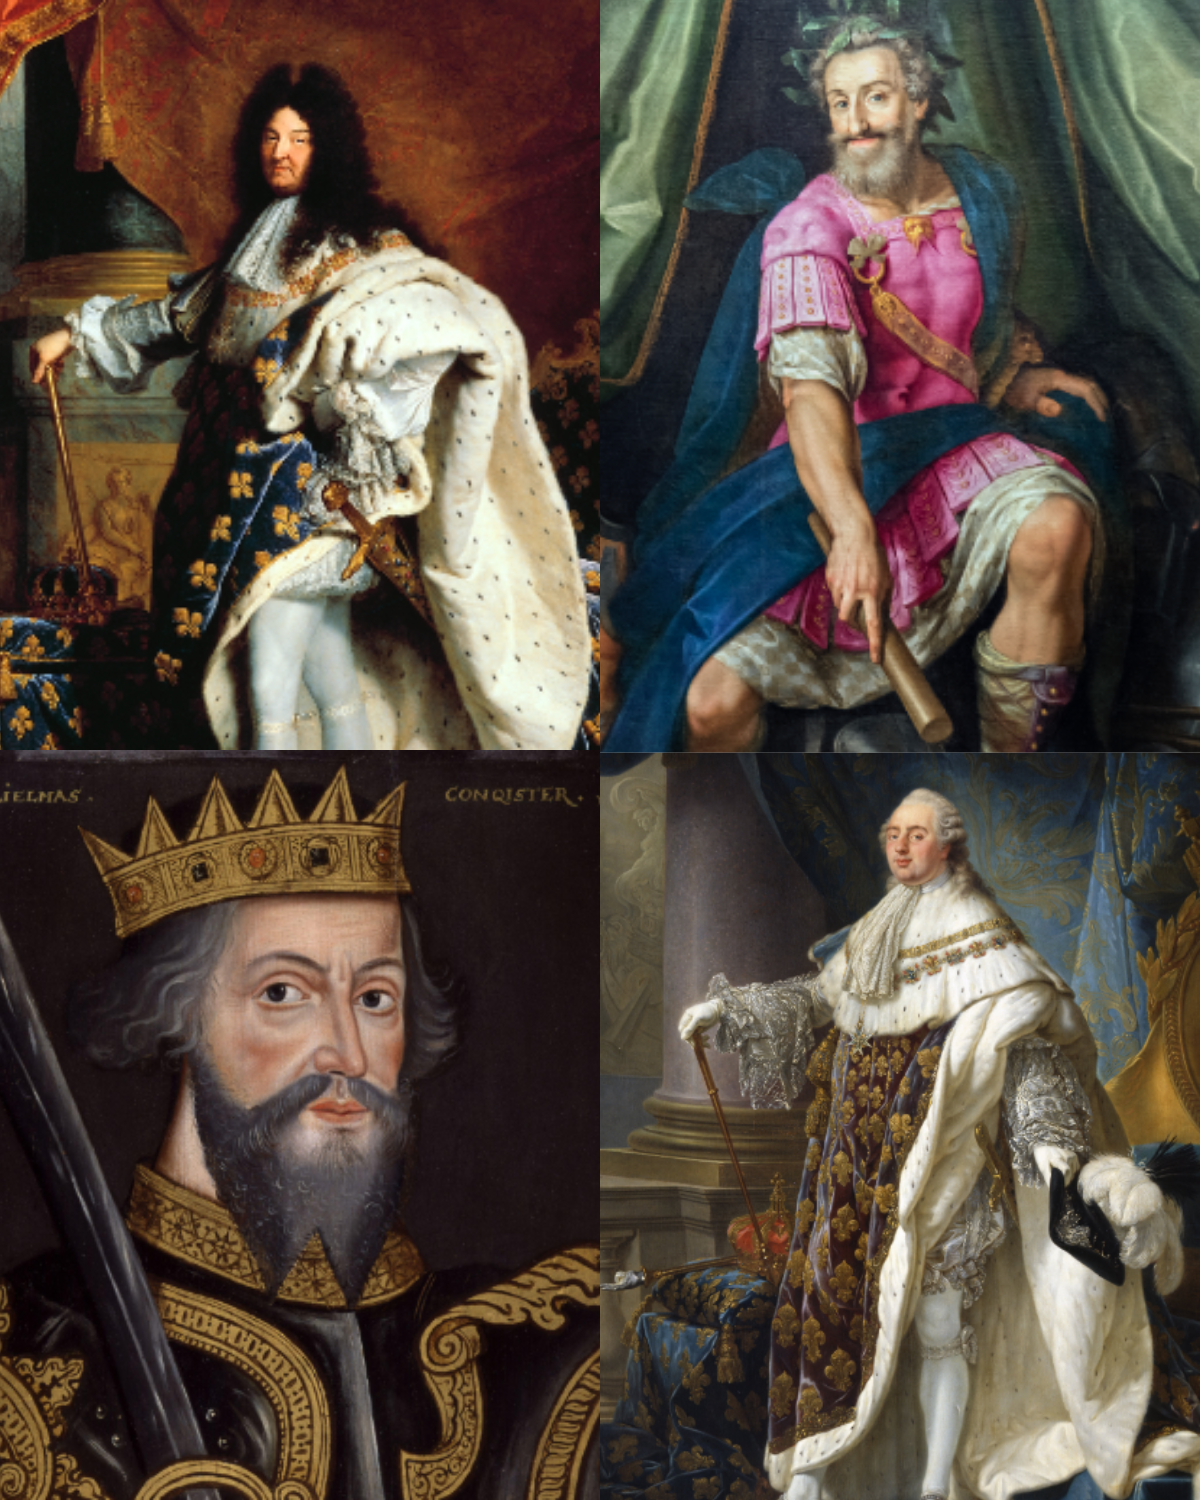 How France's King Louis IX gained sainthood explained